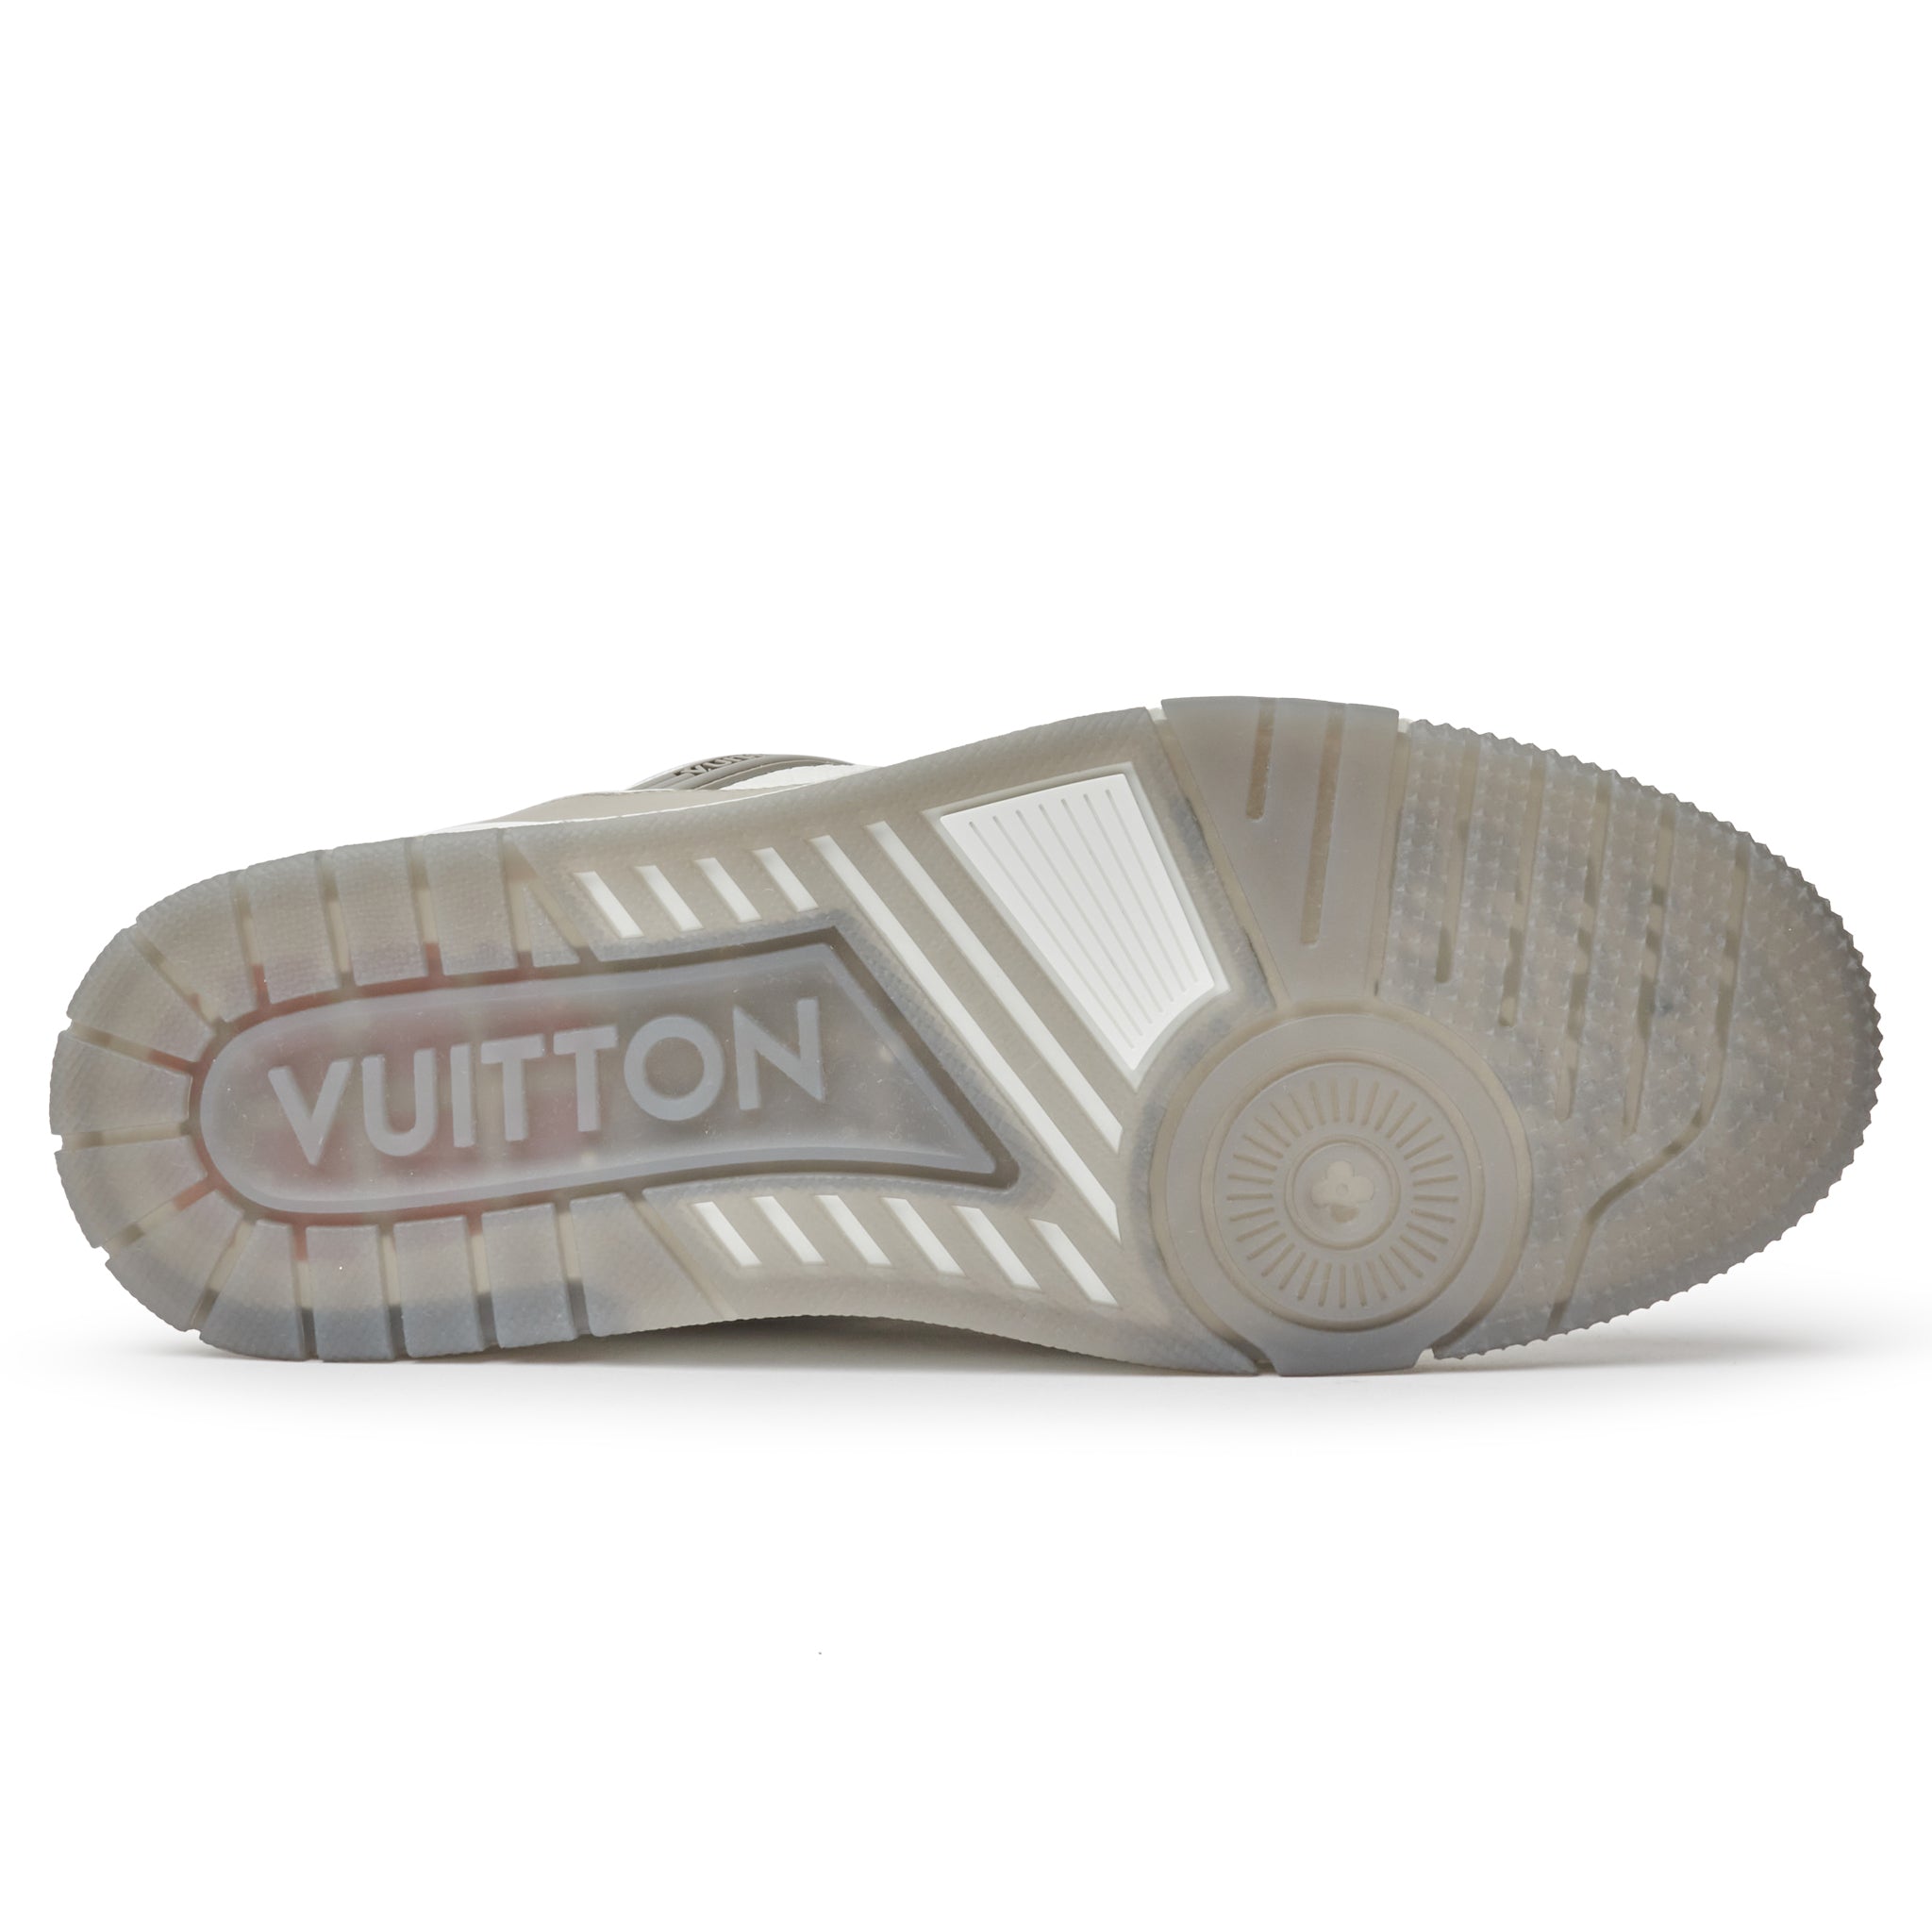 Louis Vuitton LV Trainer Rose Sneaker – Cheap Hotelomega Jordan outlet